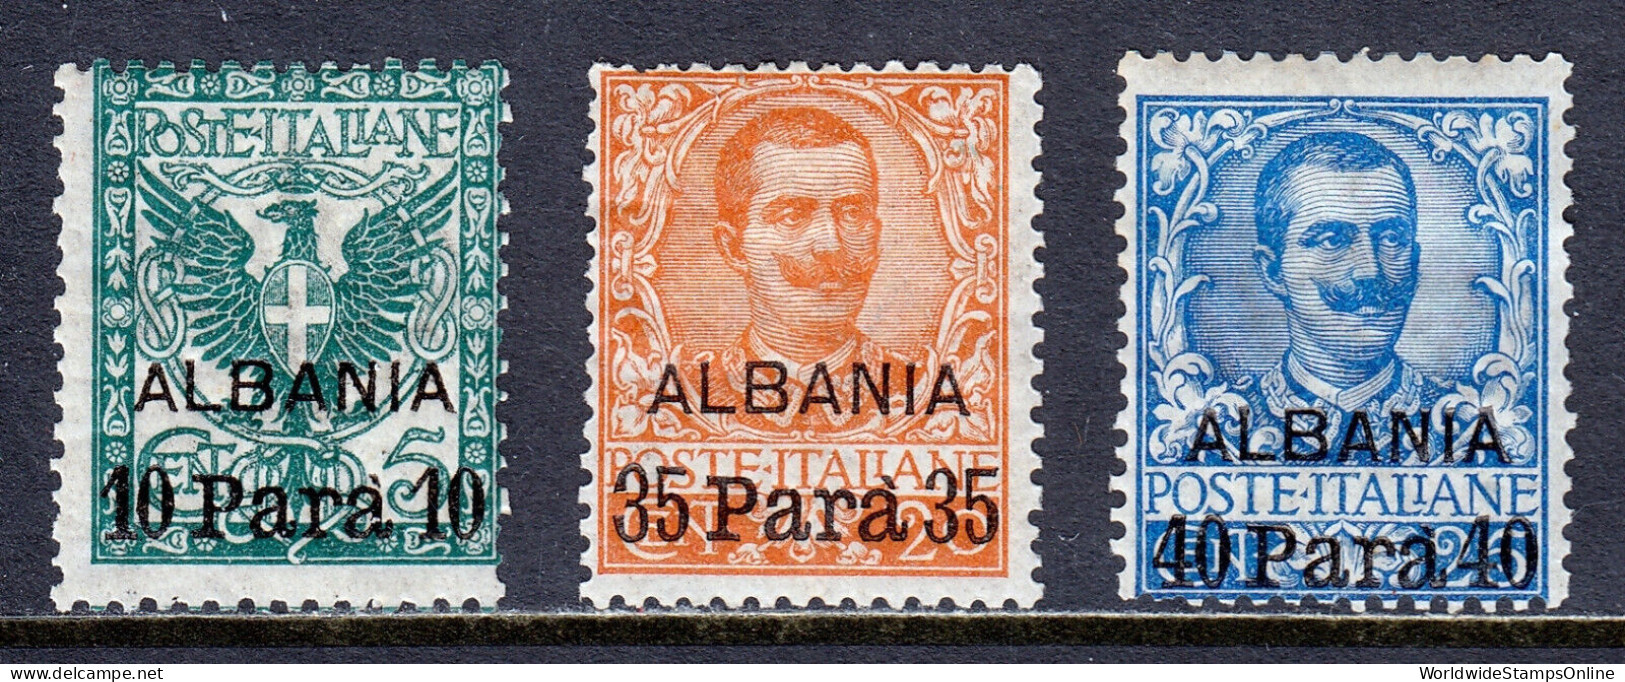 ITALY (OFFICES IN ALBANIA) — SCOTT 1-3 — 1903 OVERPRINT SET — MH — SCV $26 - Albania